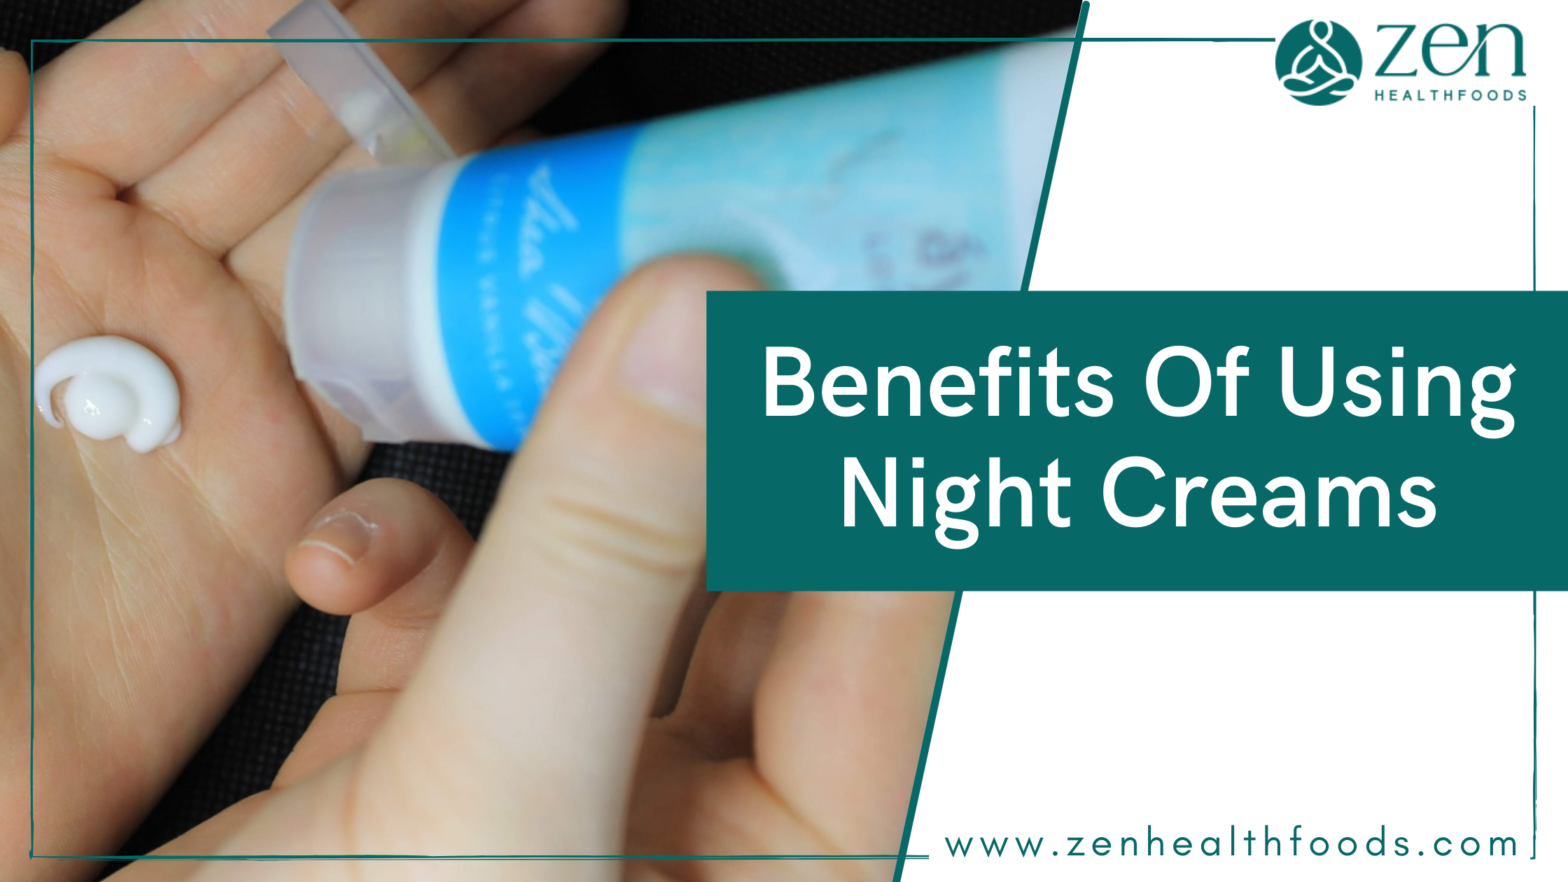 Benefits Of Using Night Creams